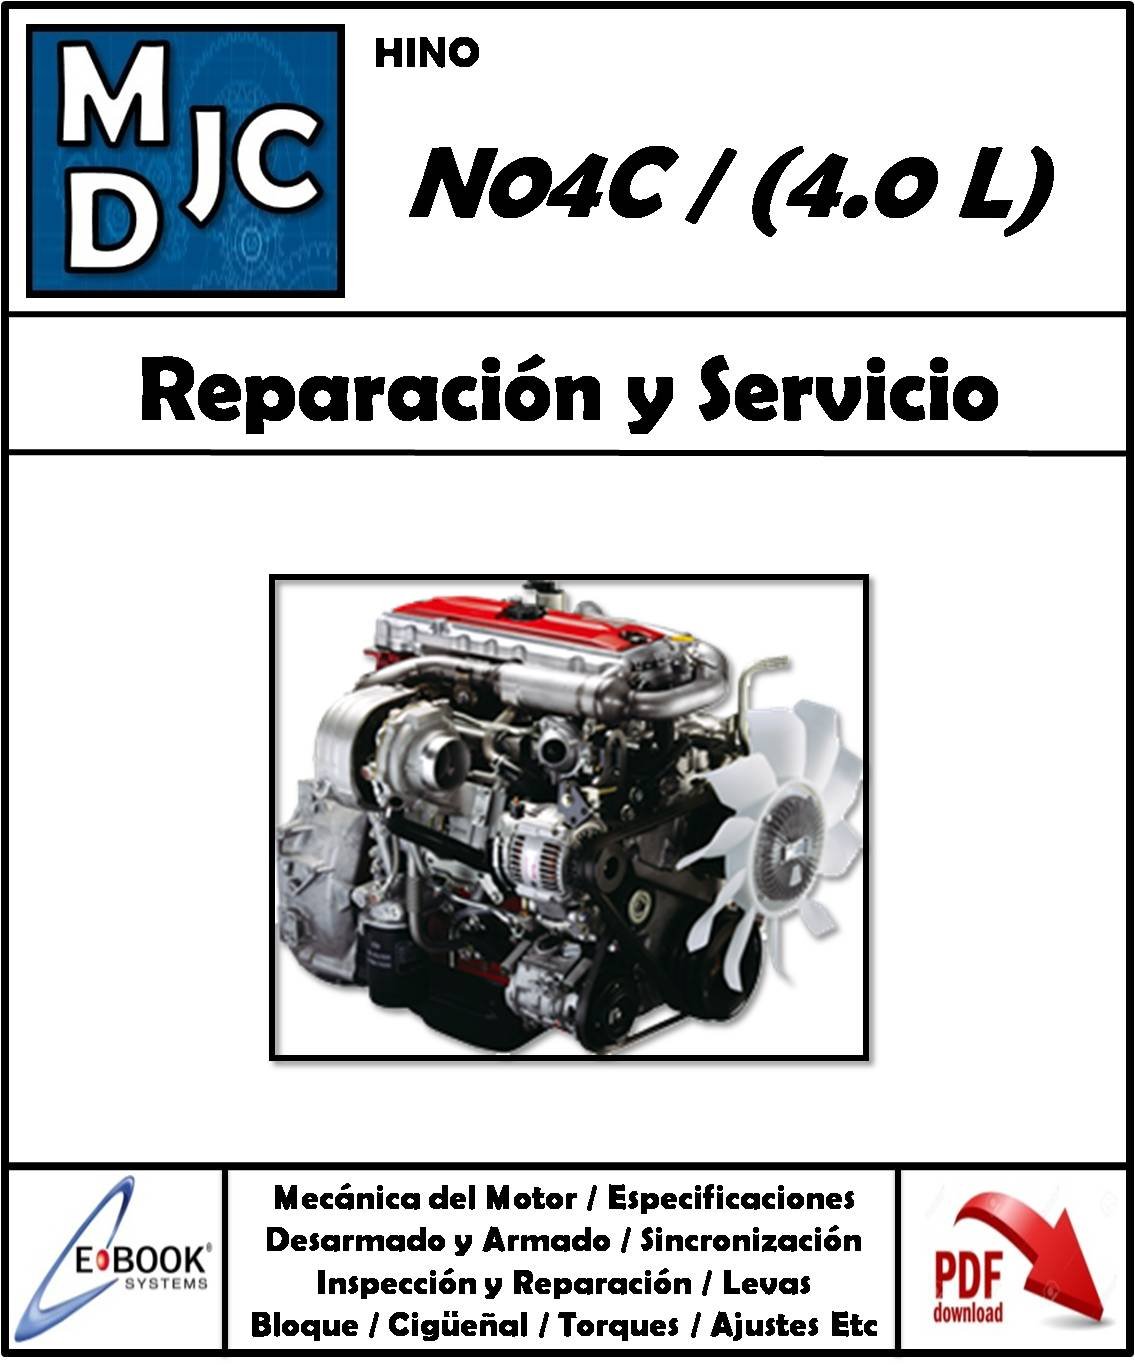 Hino  N04C  Motor 4.0 L